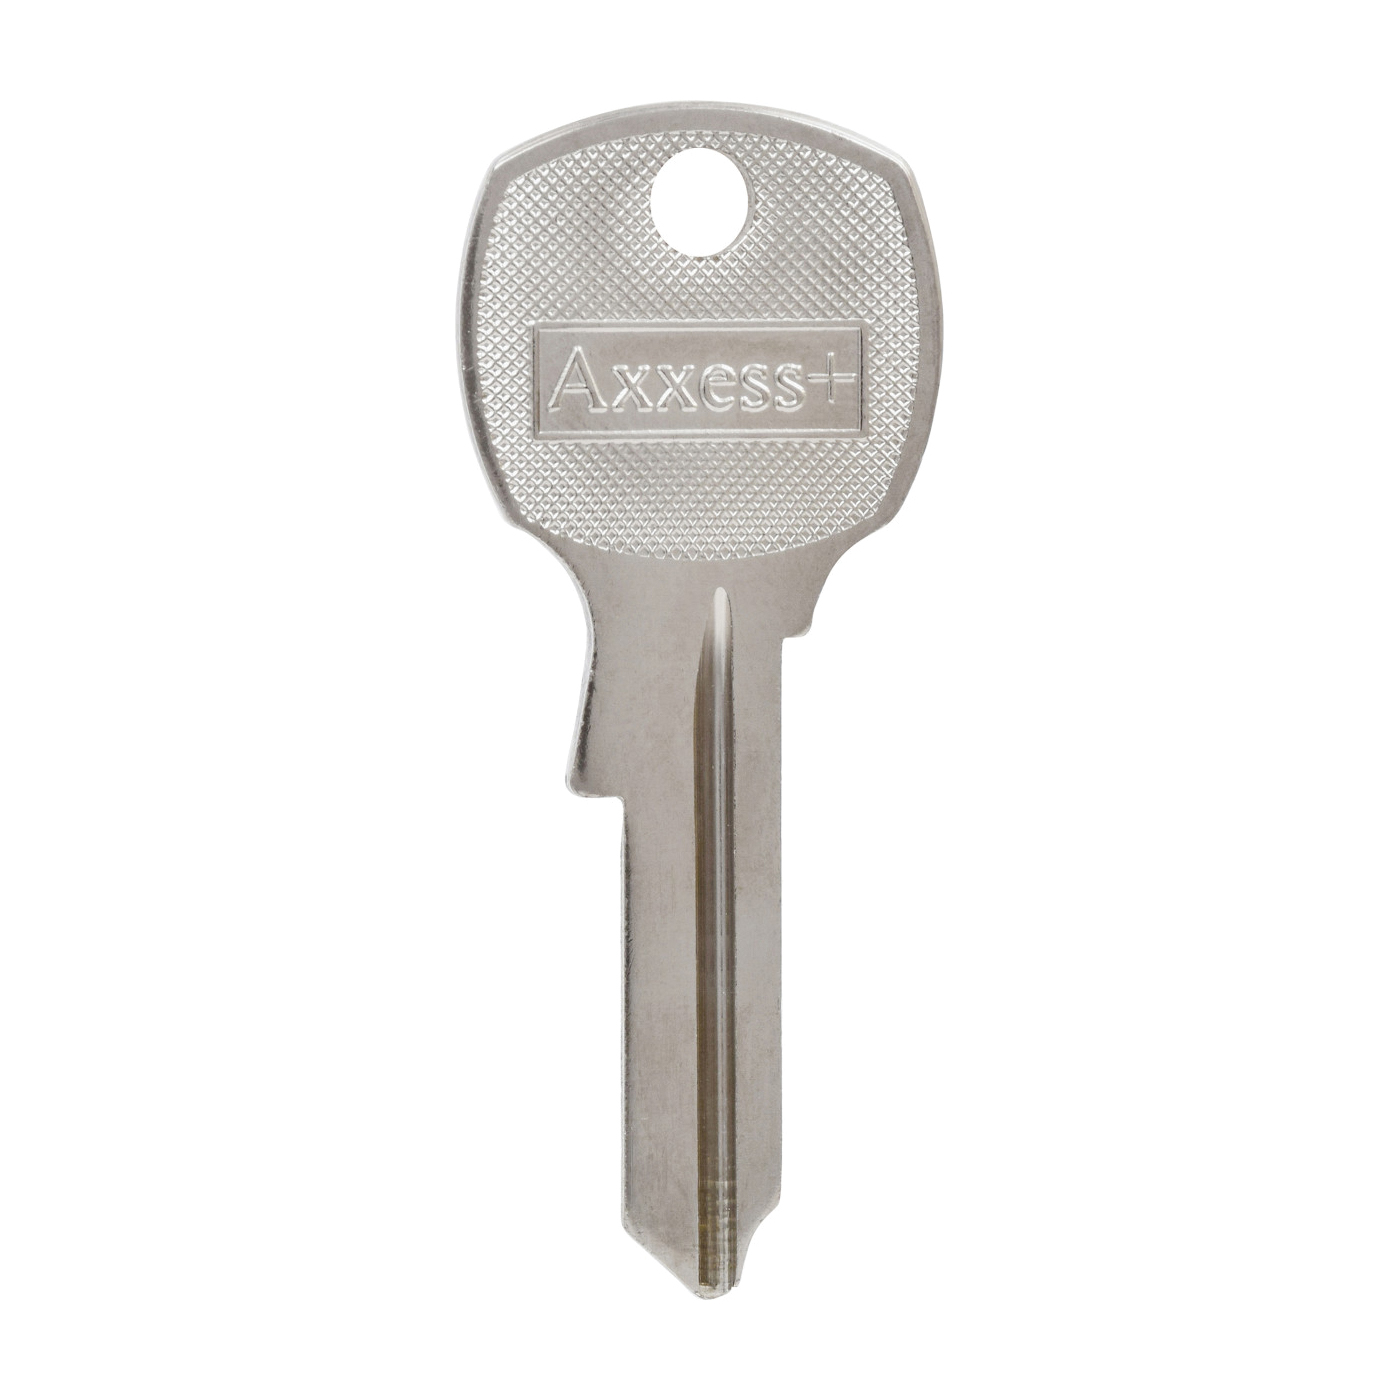 88530 Key Blank, Brass, Nickel-Plated, For: National Locks